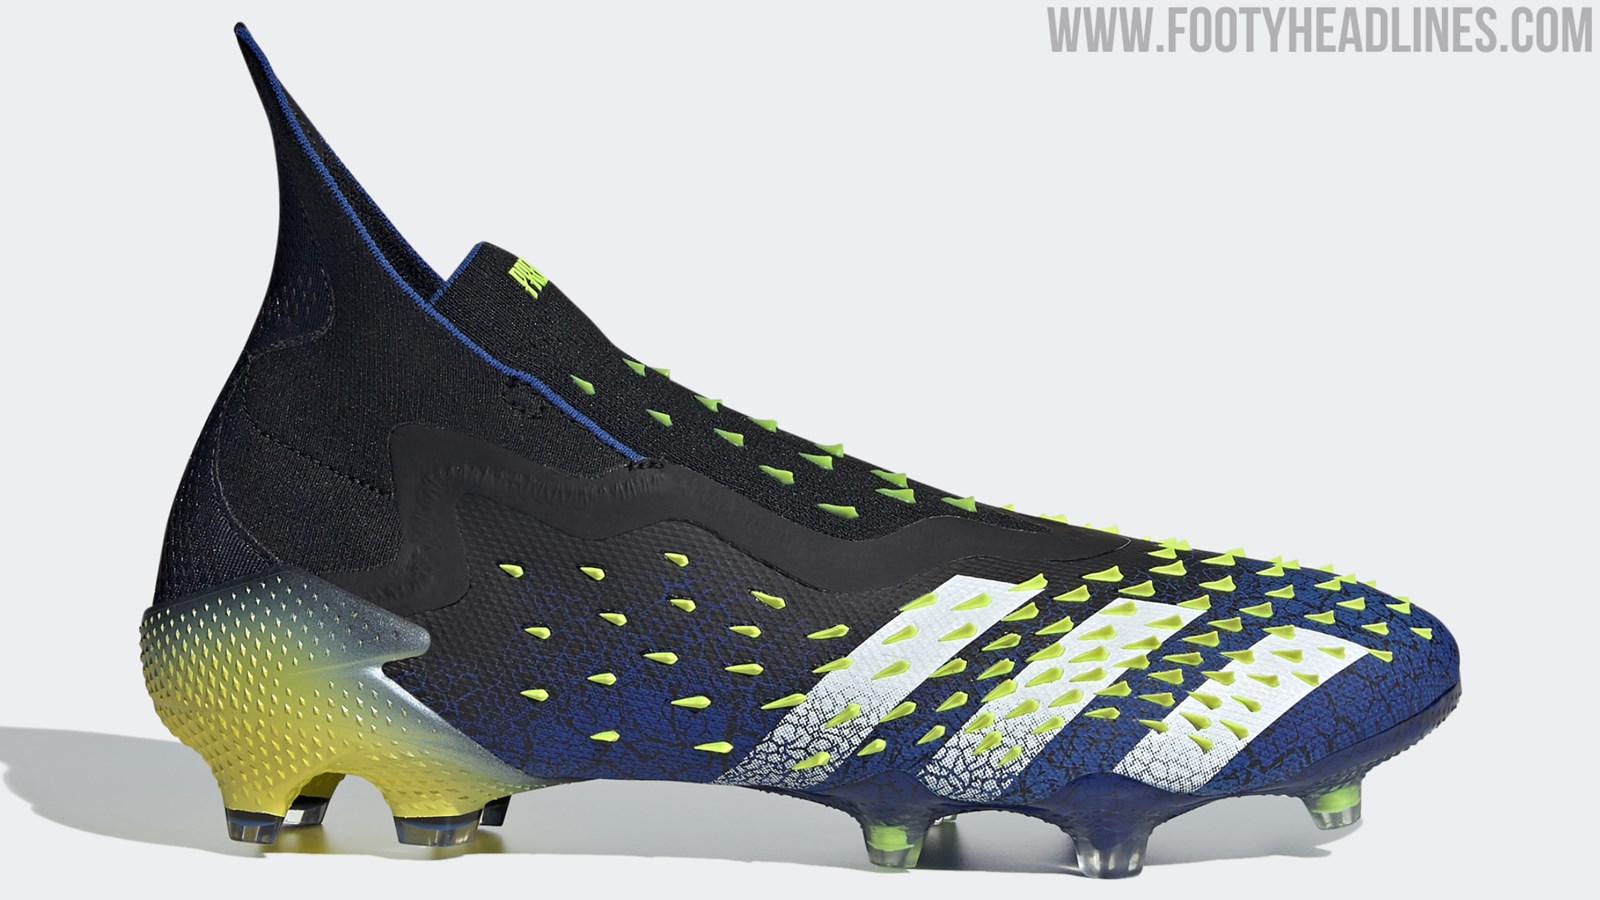 Guión Suave cama Adidas 'Superlative' 2021 Boots Pack Released - Next-Gen Copa & Predator -  Footy Headlines